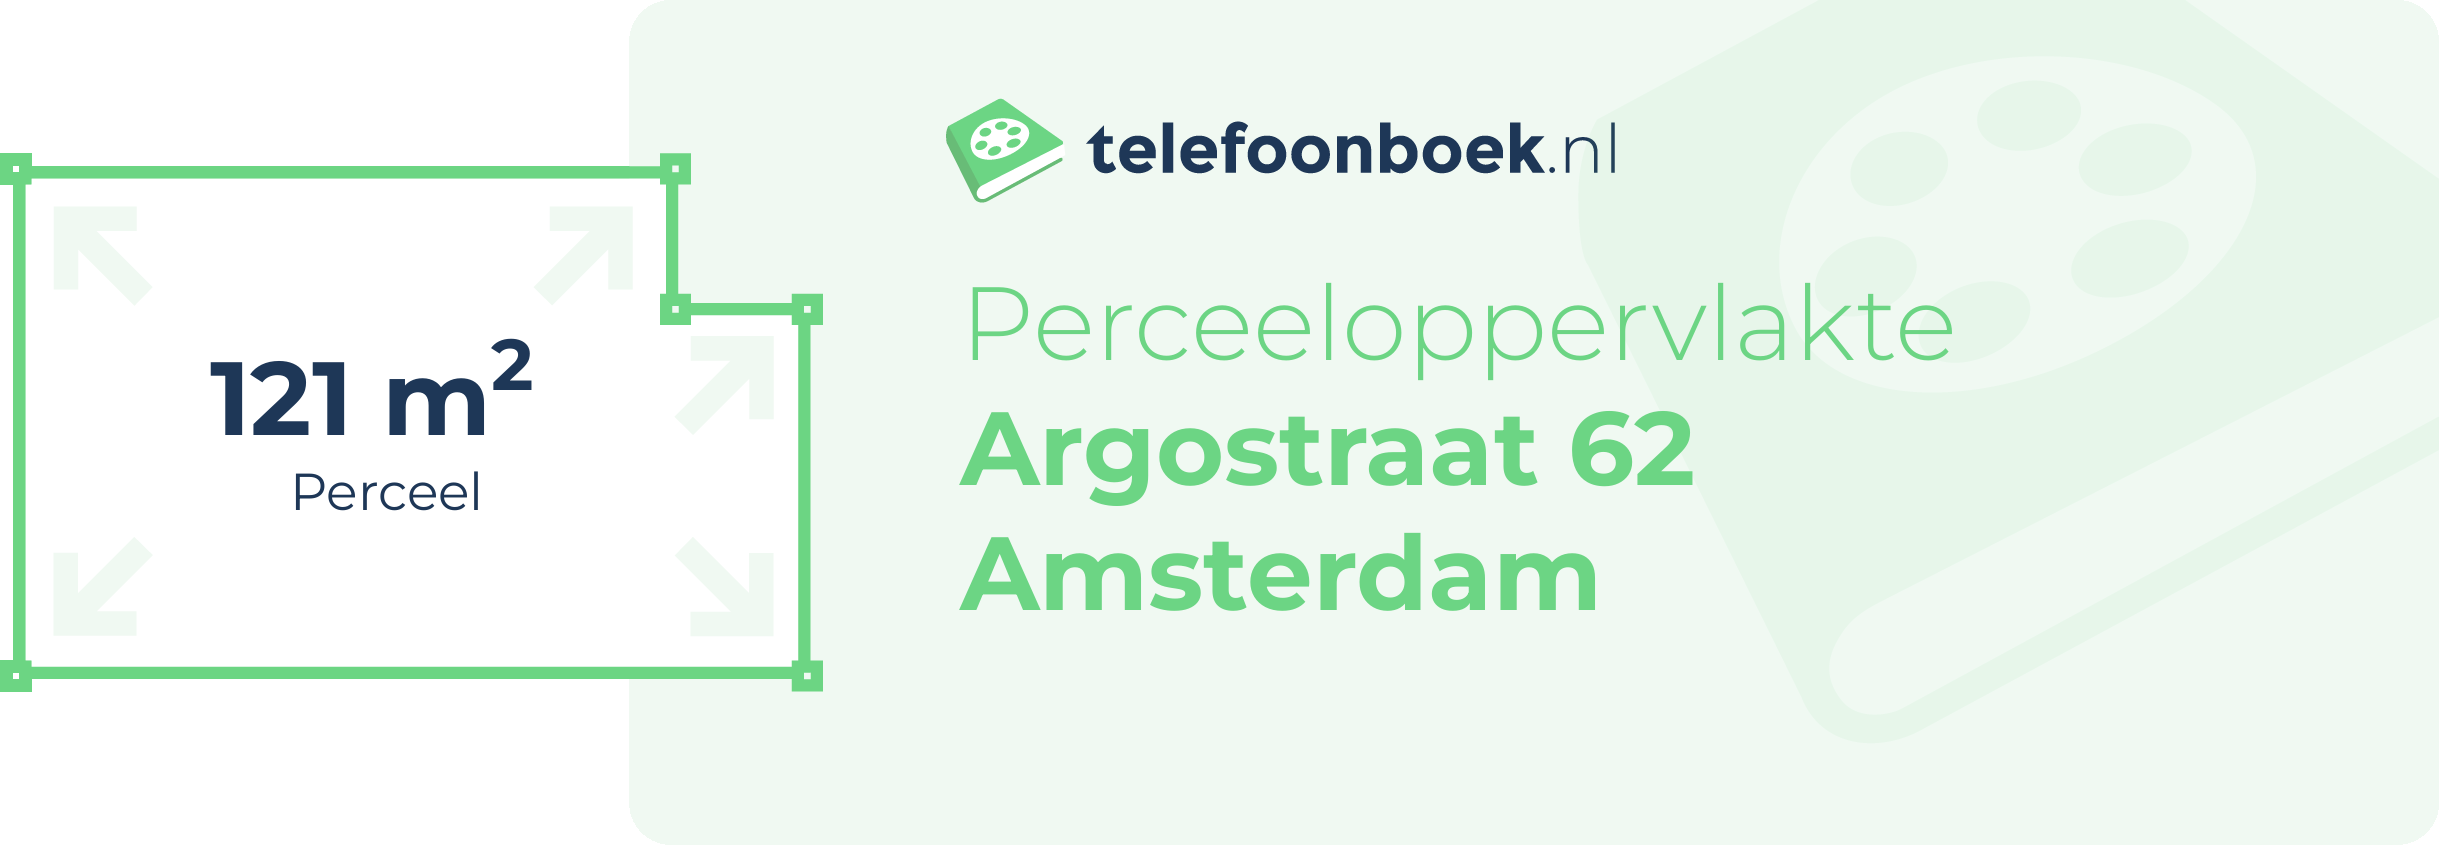 Perceeloppervlakte Argostraat 62 Amsterdam